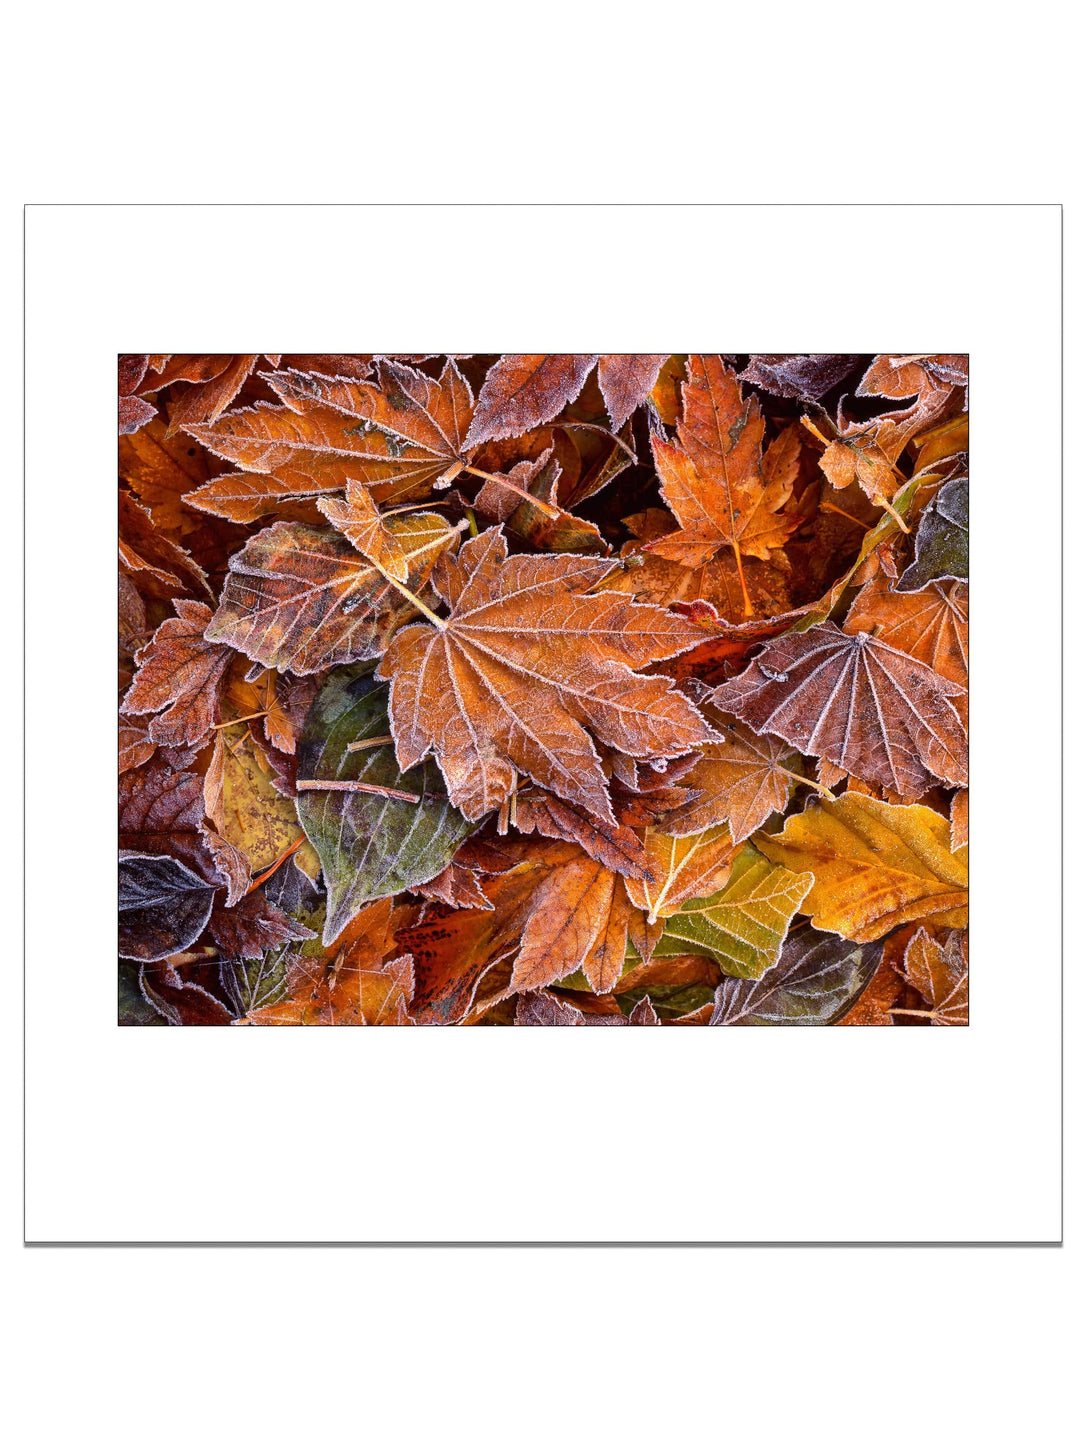 Autumn's First Frost Square Edition - Square Editions - Richard Stefani - Stefani Fine Art